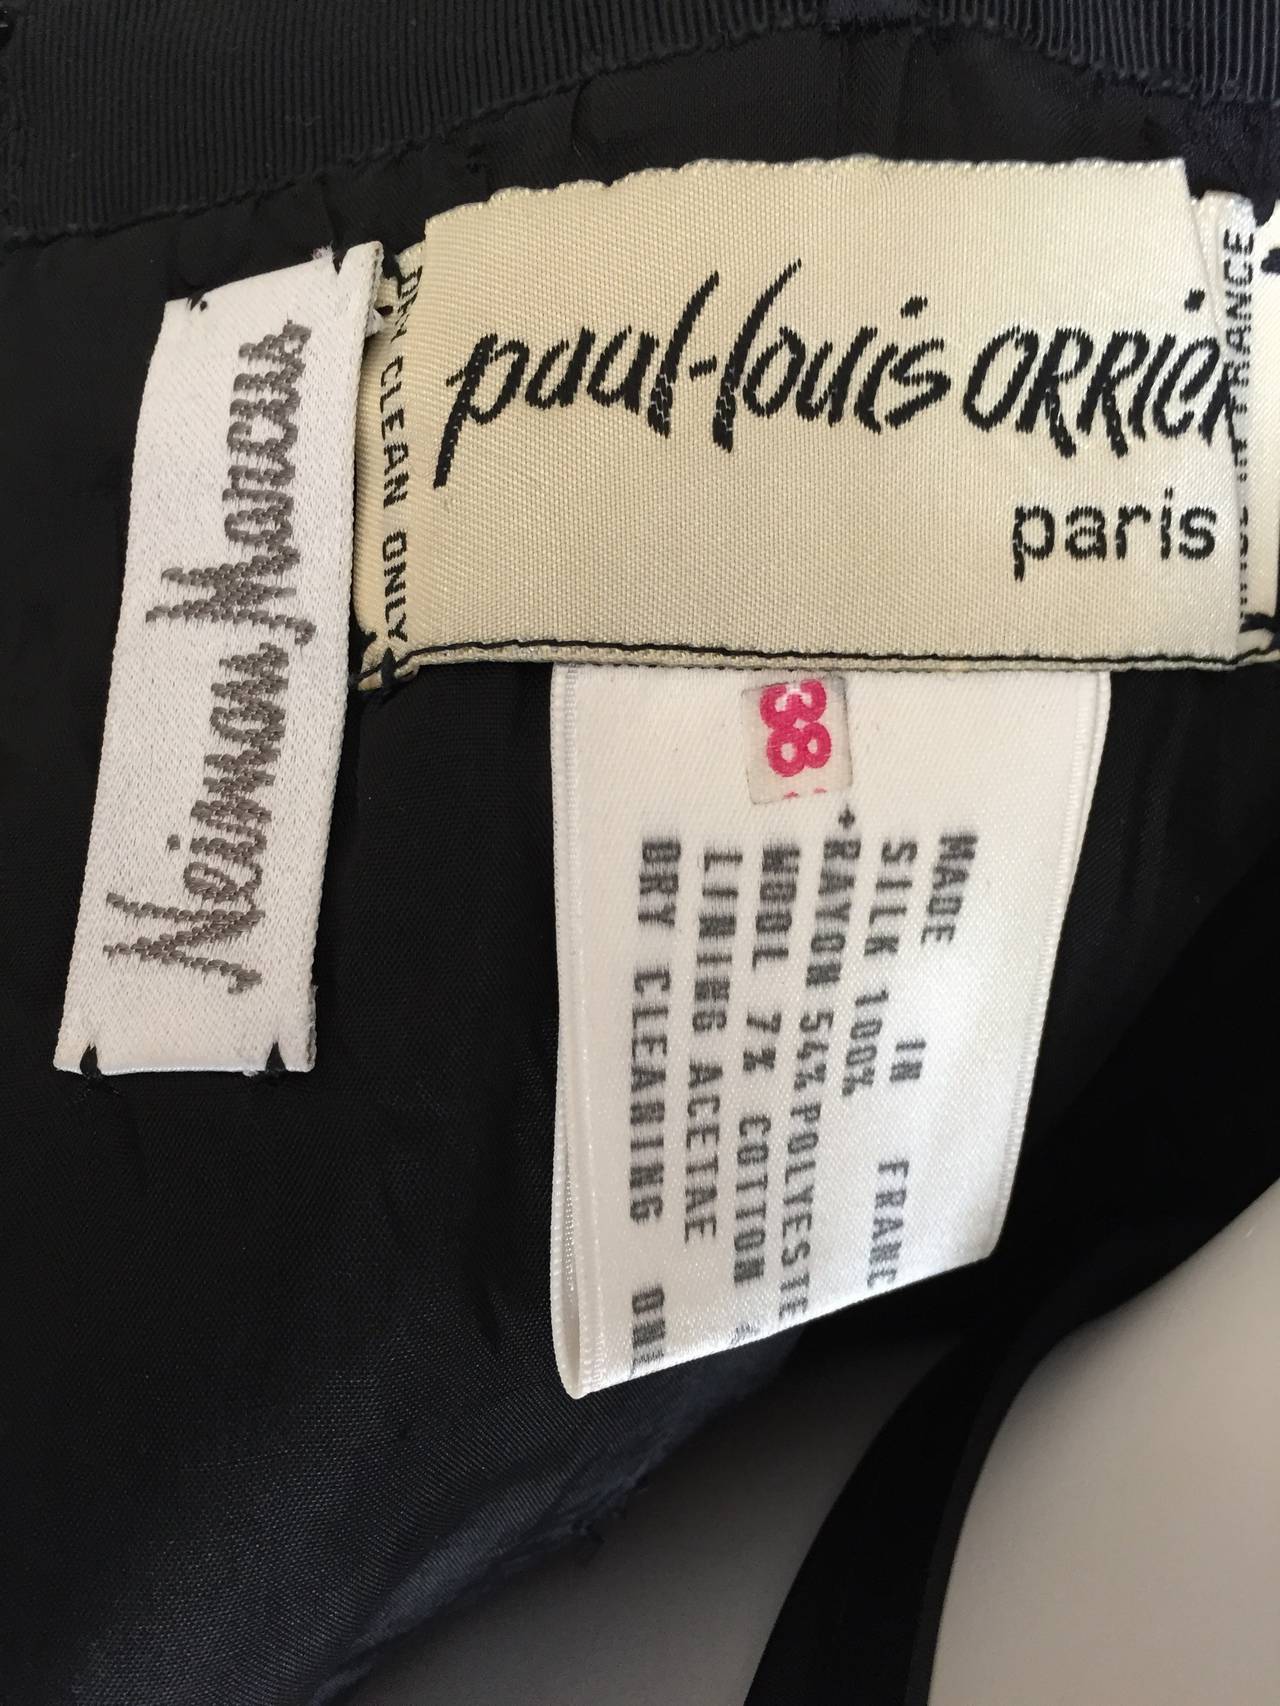 Paul-Louis Orrier Paris Black Strapless Gown w Gold Brocade & Shawl 2